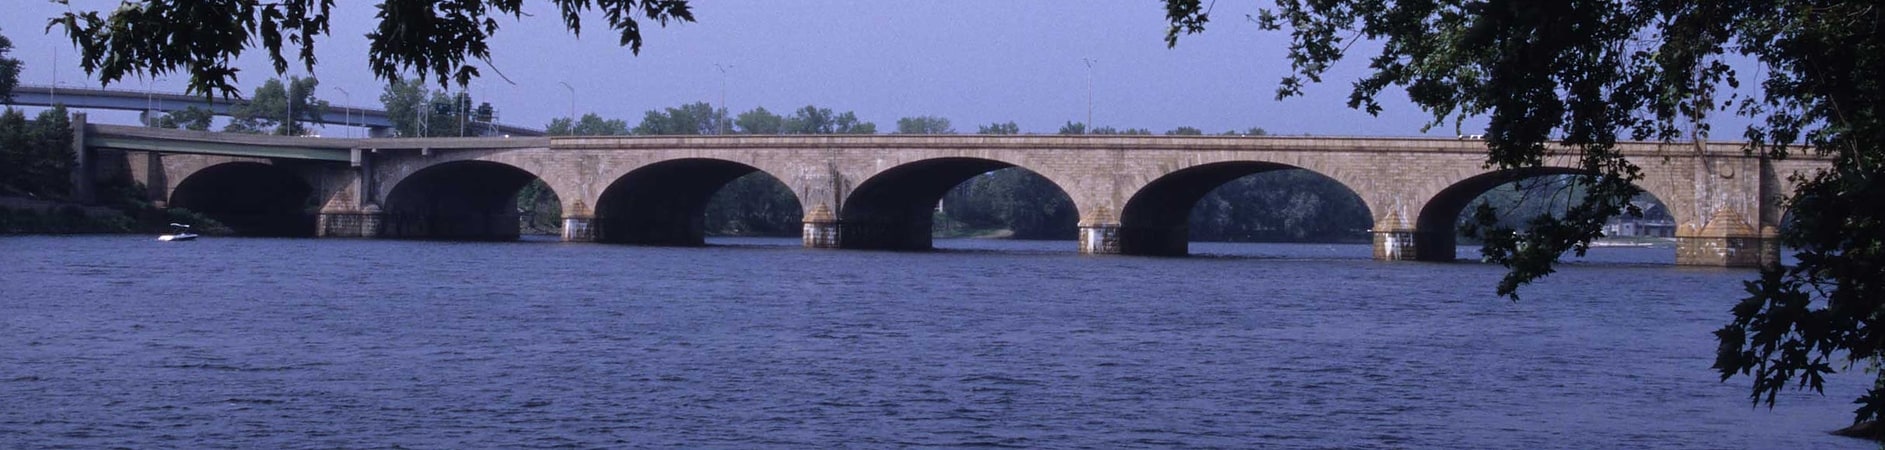 Arch bridge in East Hartford, Connecticut